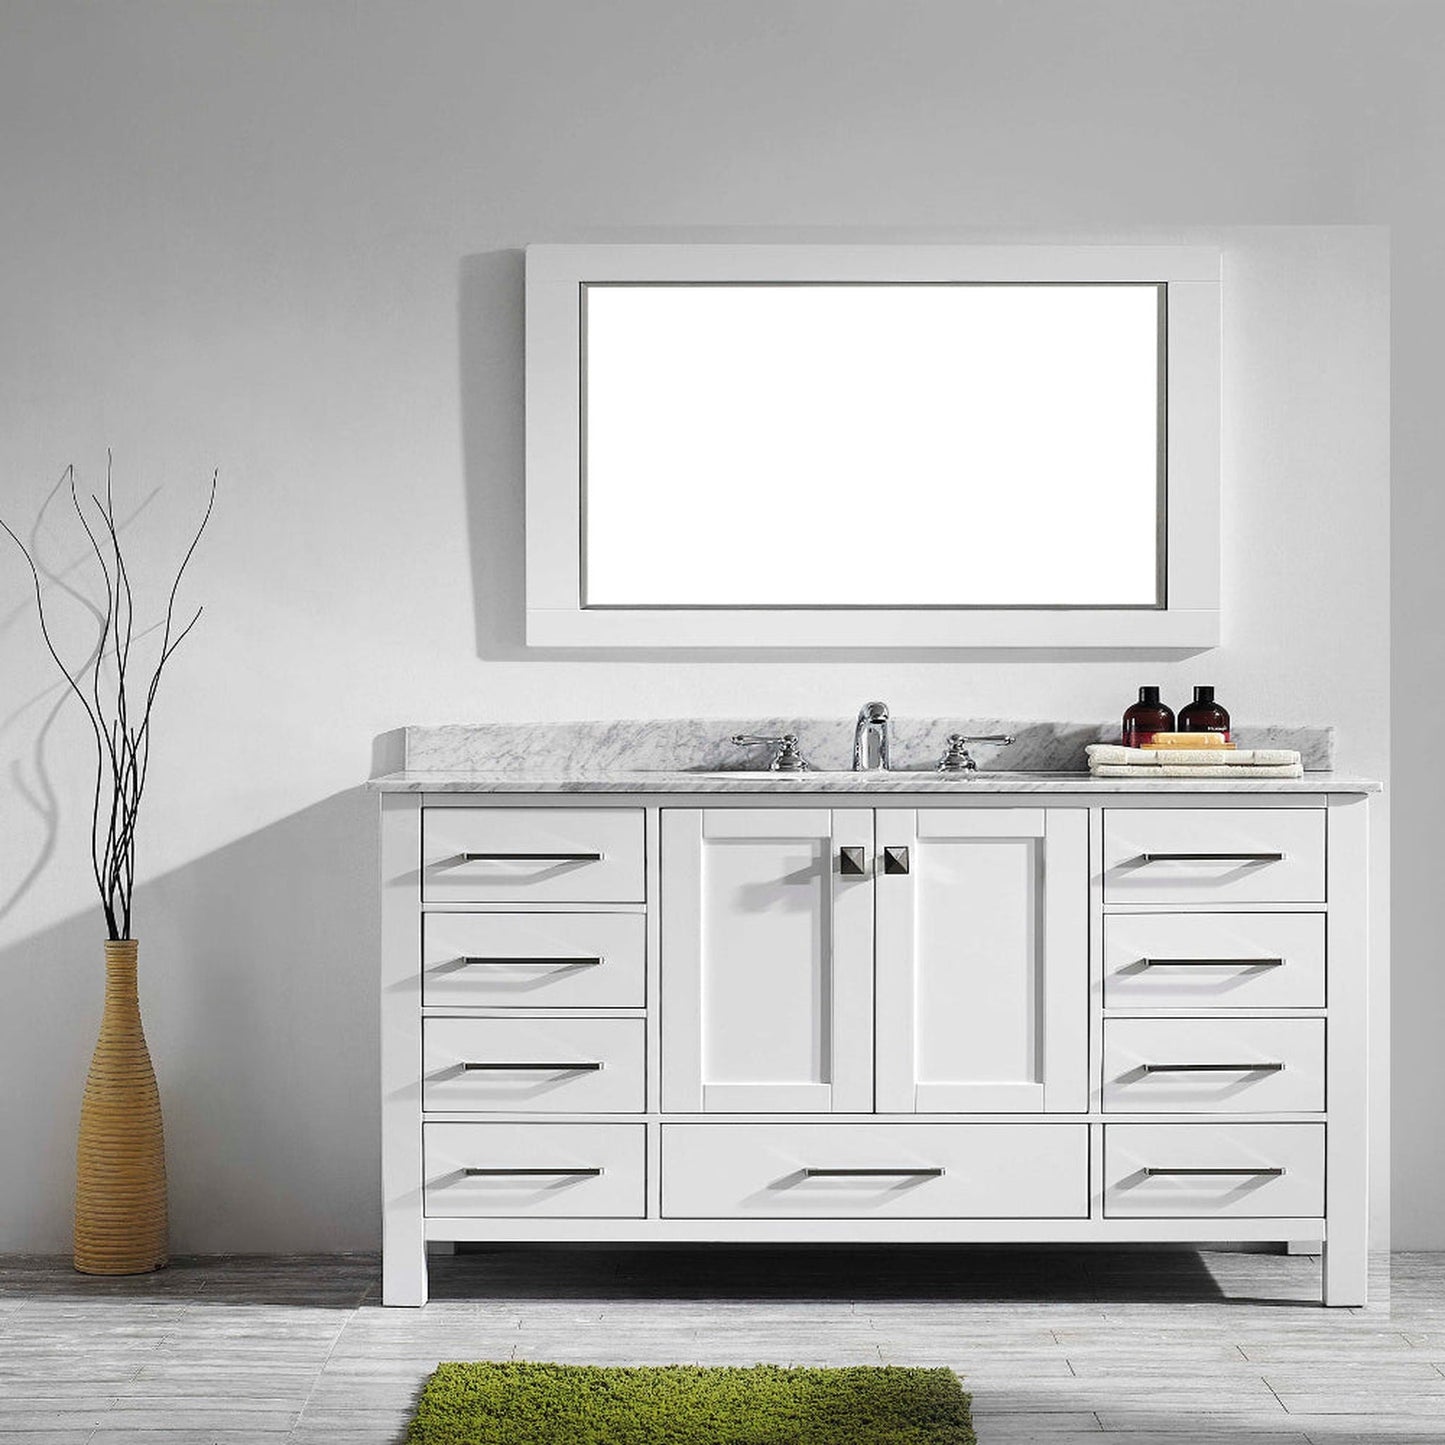 Eviva Aberdeen 60" x 34" White Freestanding Bathroom Vanity With Single Undermount Sink